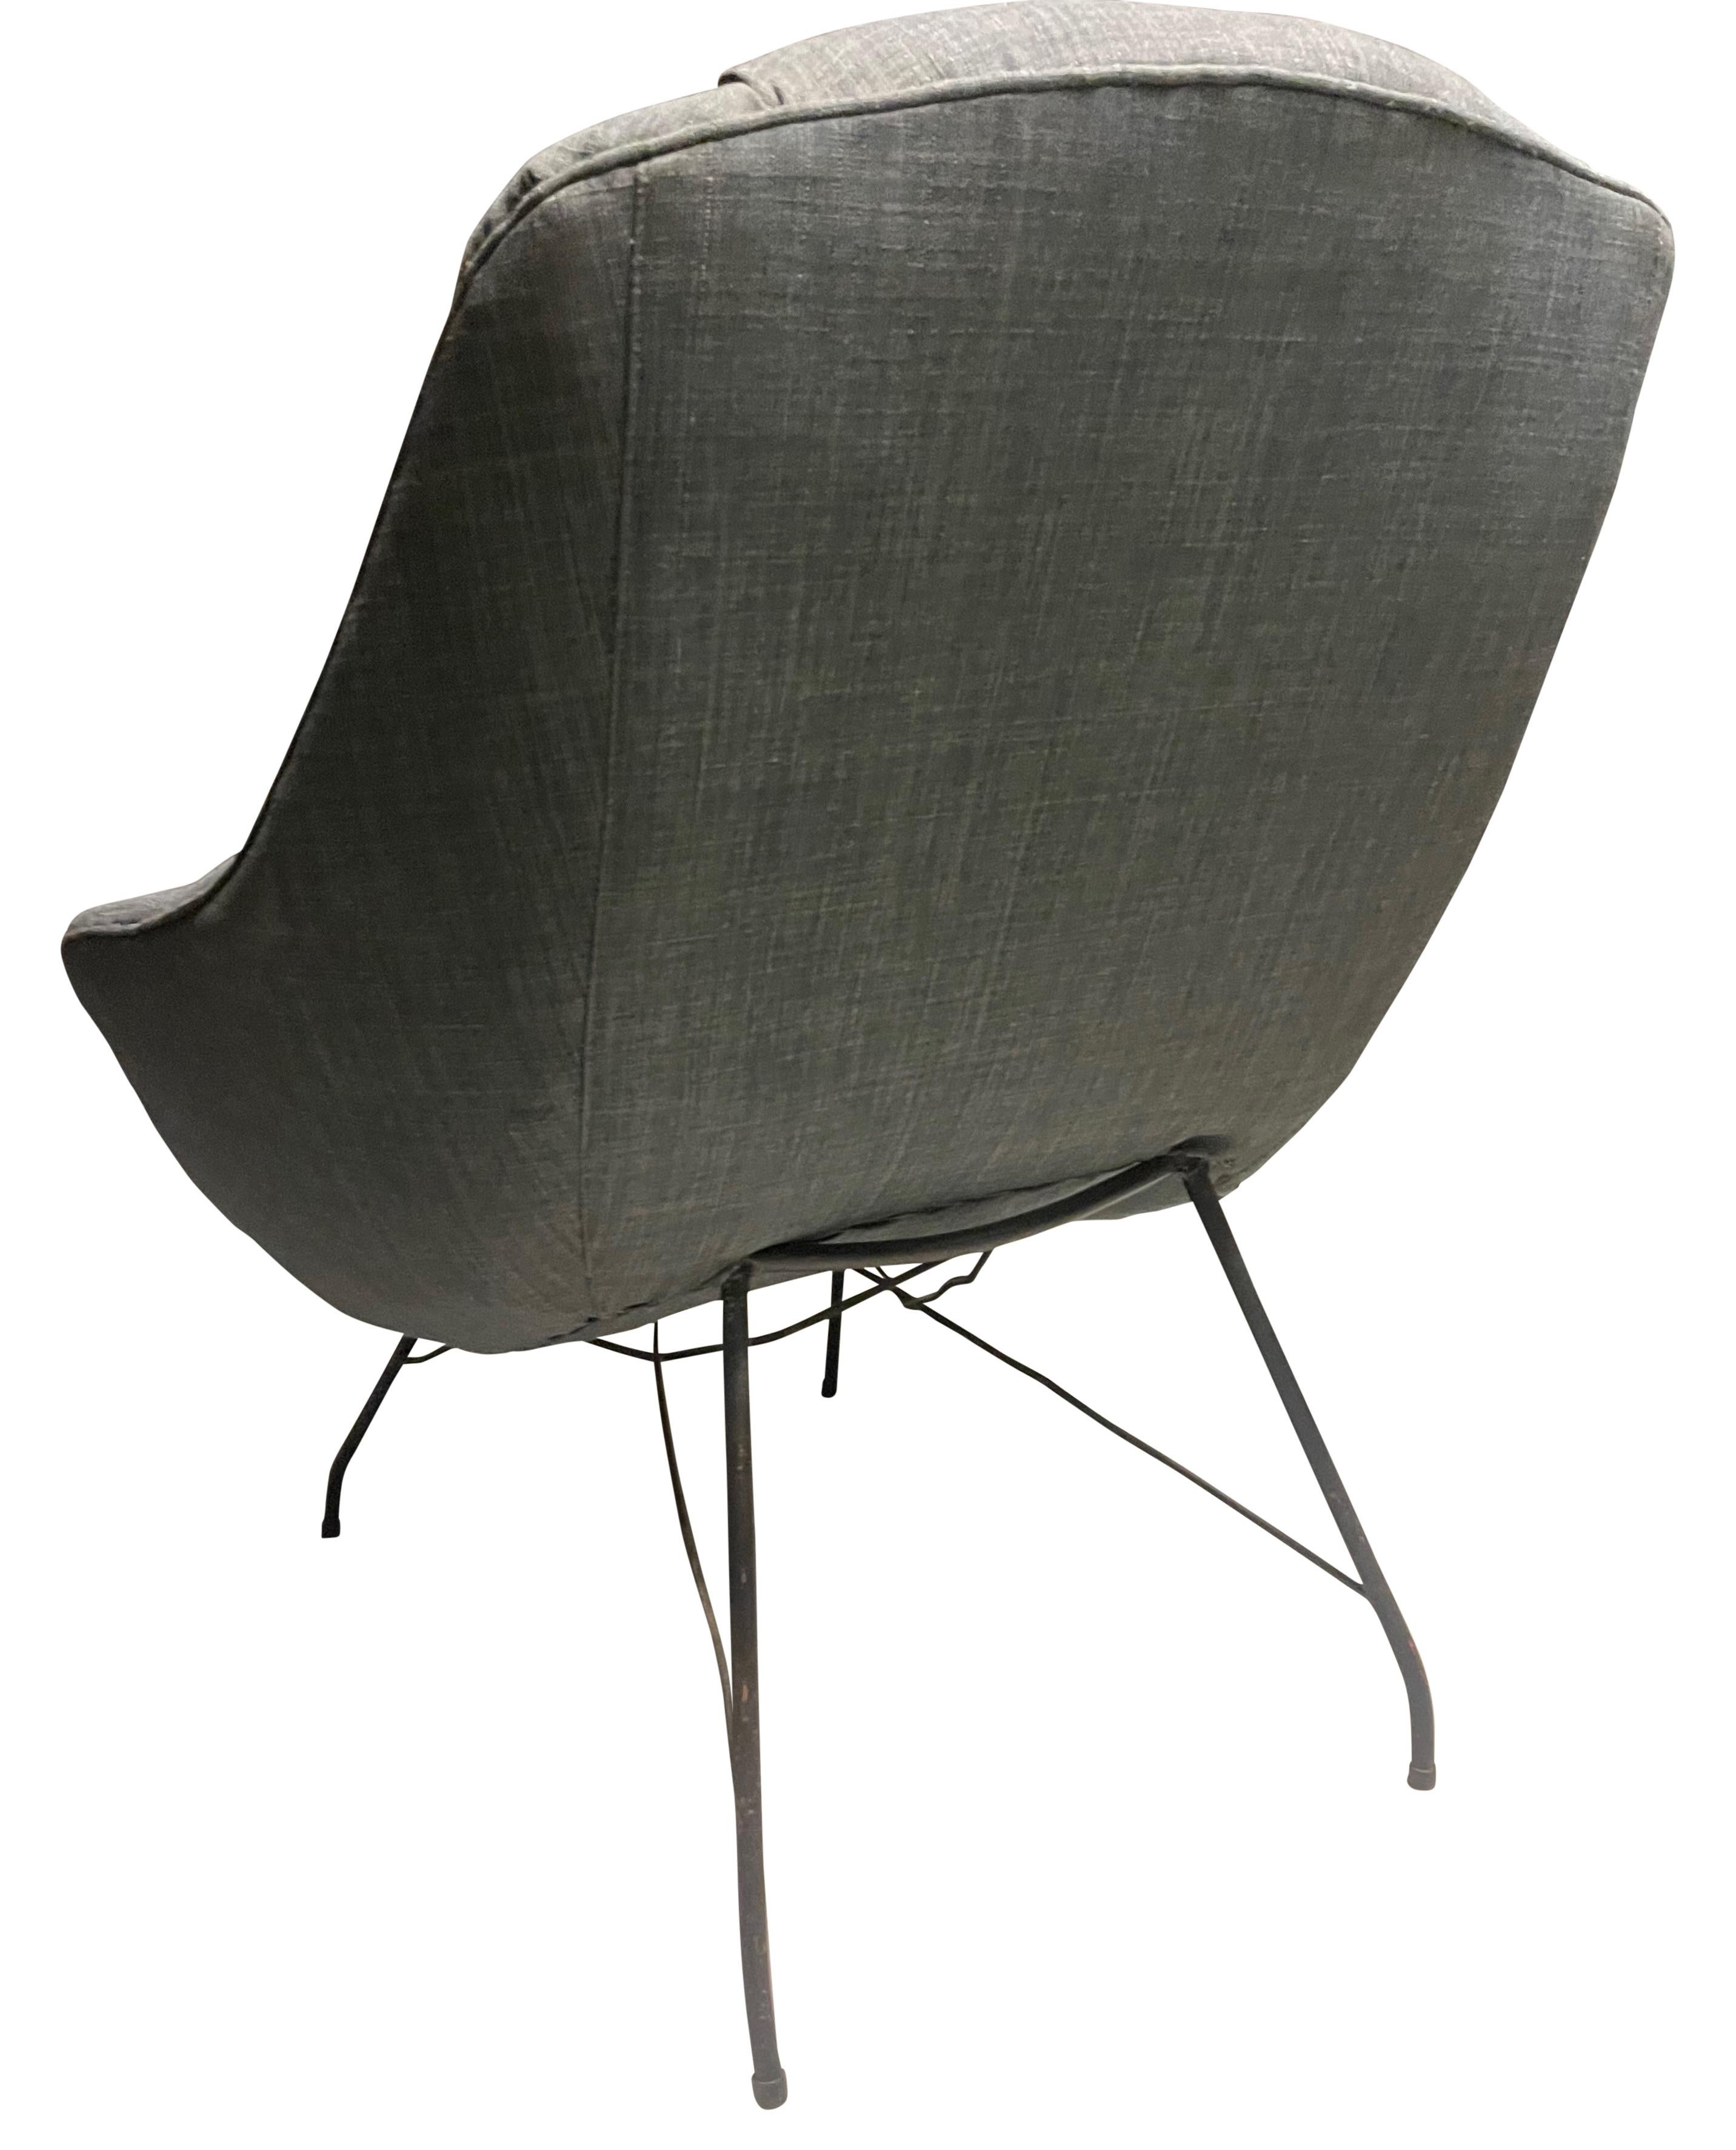 Carlo Hauner Martin Eisler Concha Lounge Chair, Brazil, 1950 For Sale 2